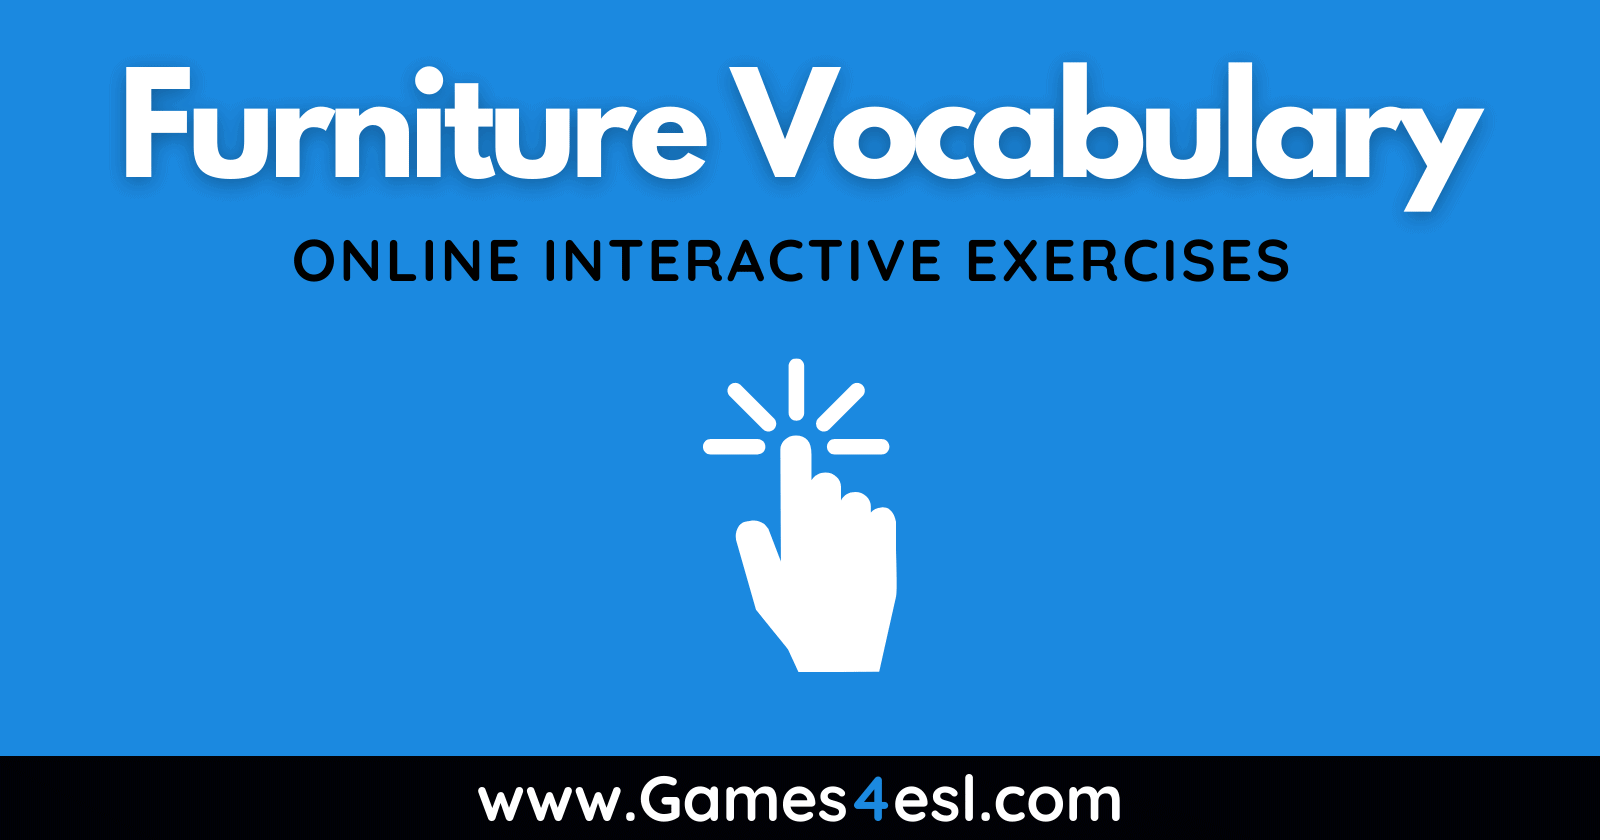 Furniture Vocabulary Exercises